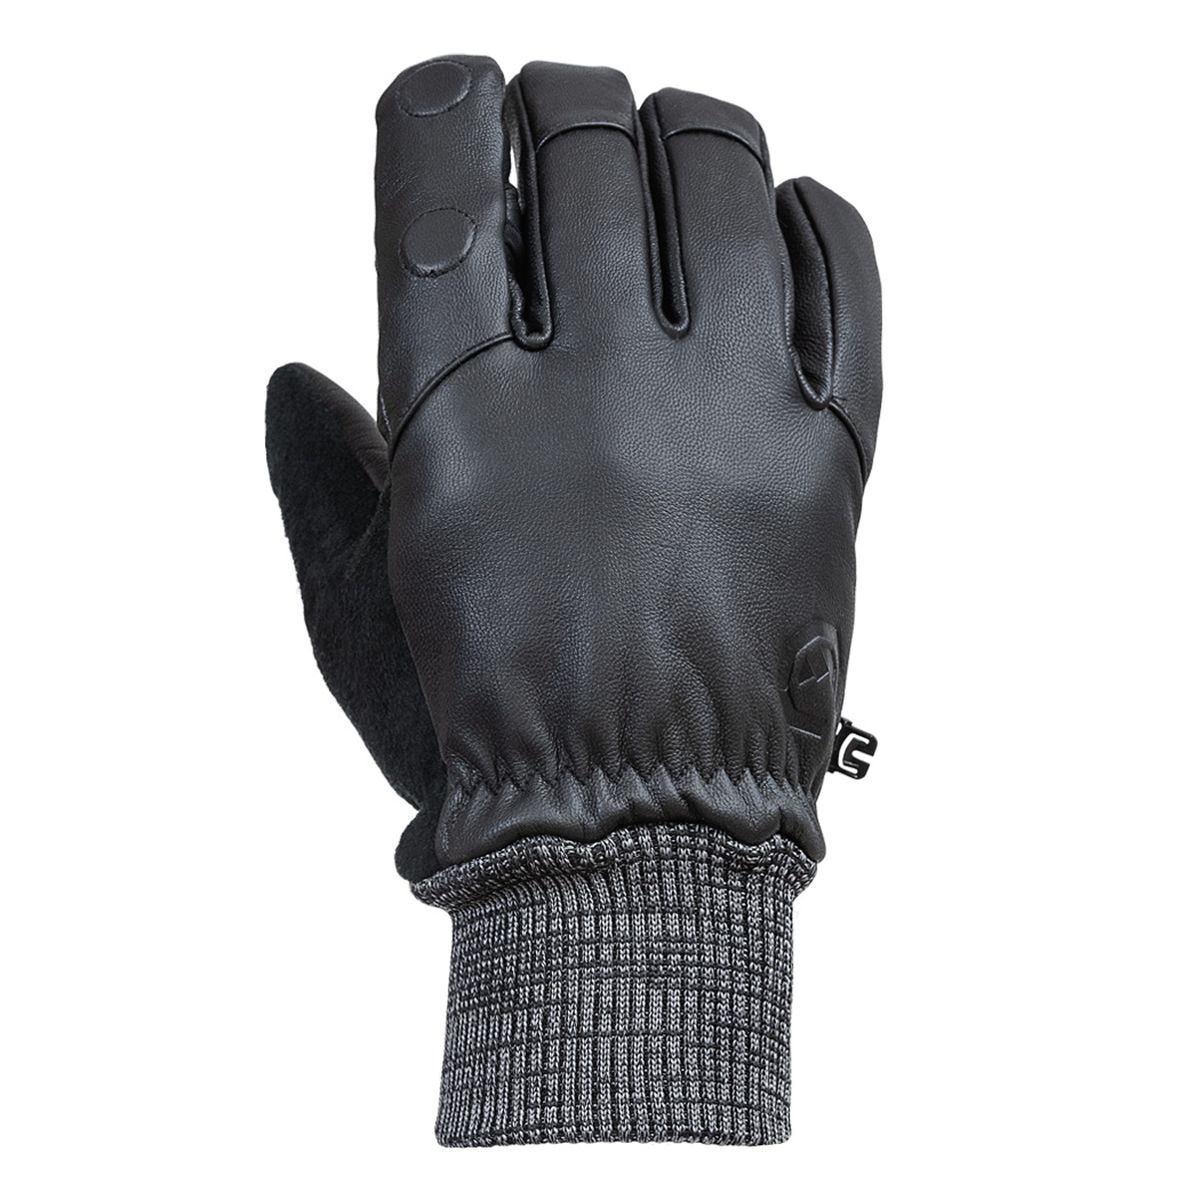 Vallerret Hatchet Leather Glove Black, Leder-Fotohandschuhe XXL Schwarz